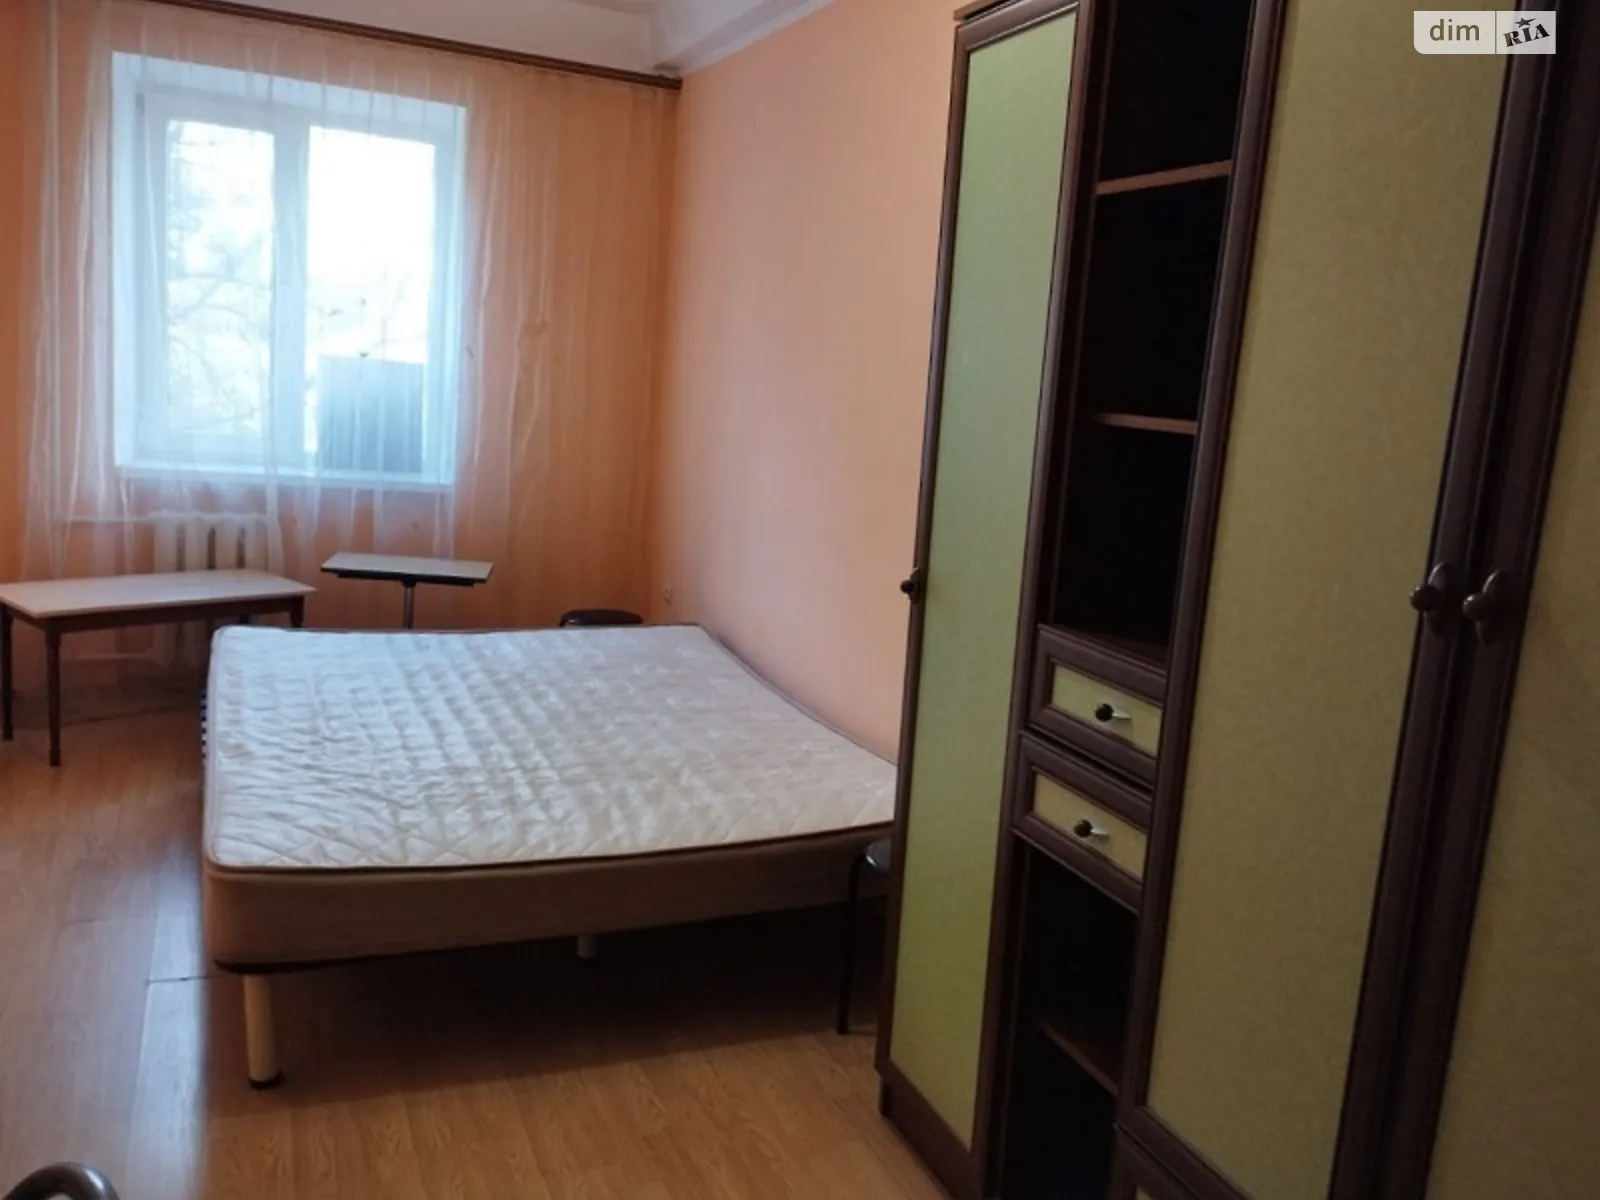 Продается комната 16 кв. м в Одессе, цена: 9000 $ - фото 1